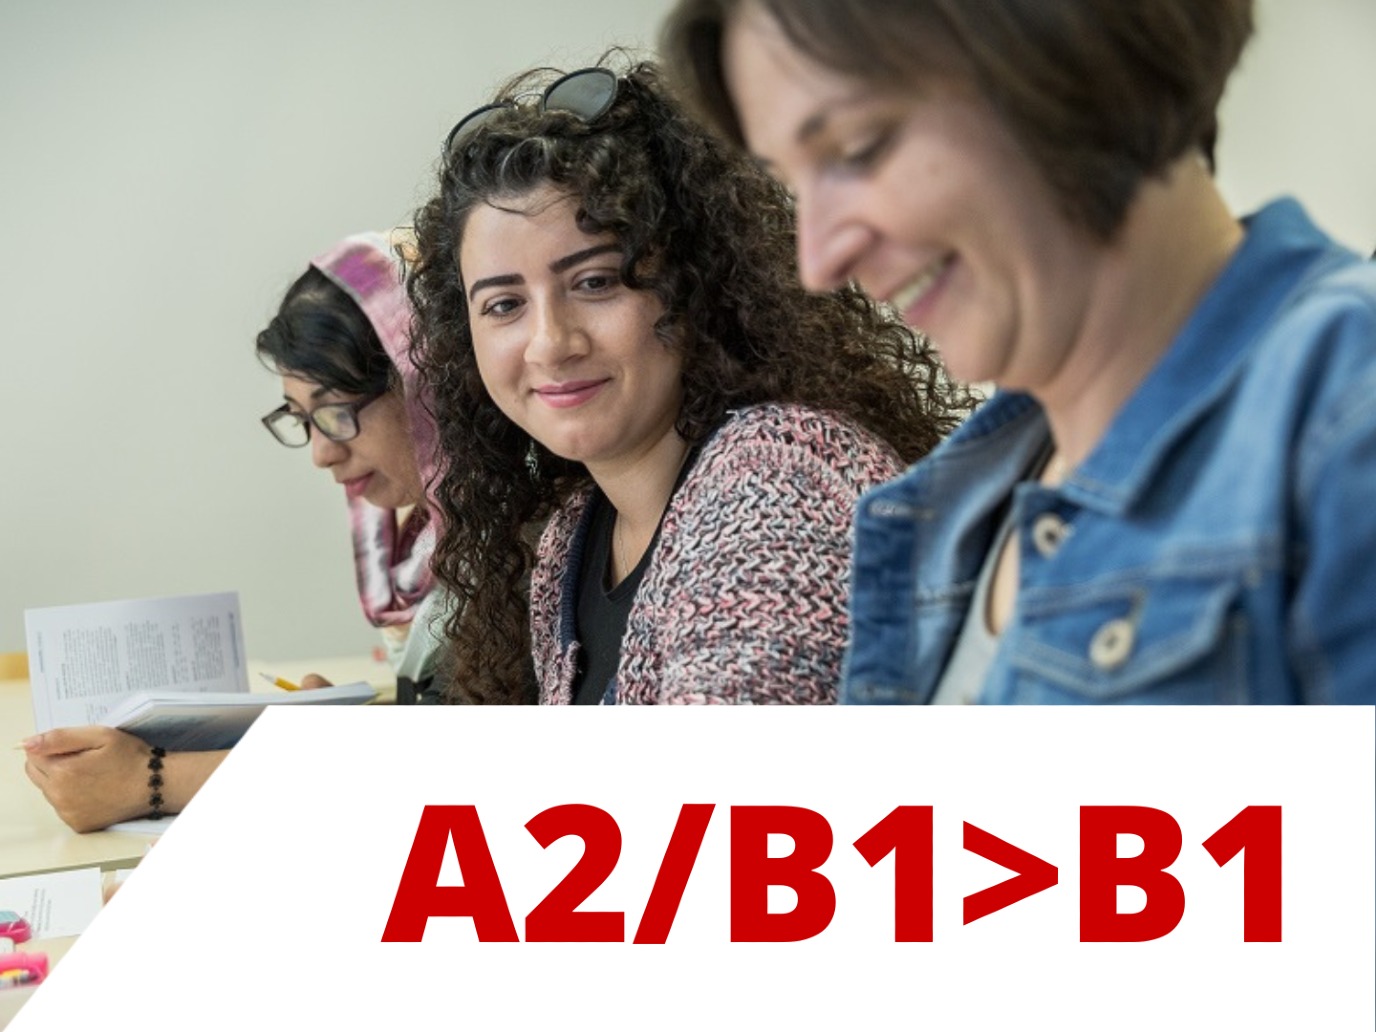 Dutch A2/B1>B1 for newcomers: civic integration